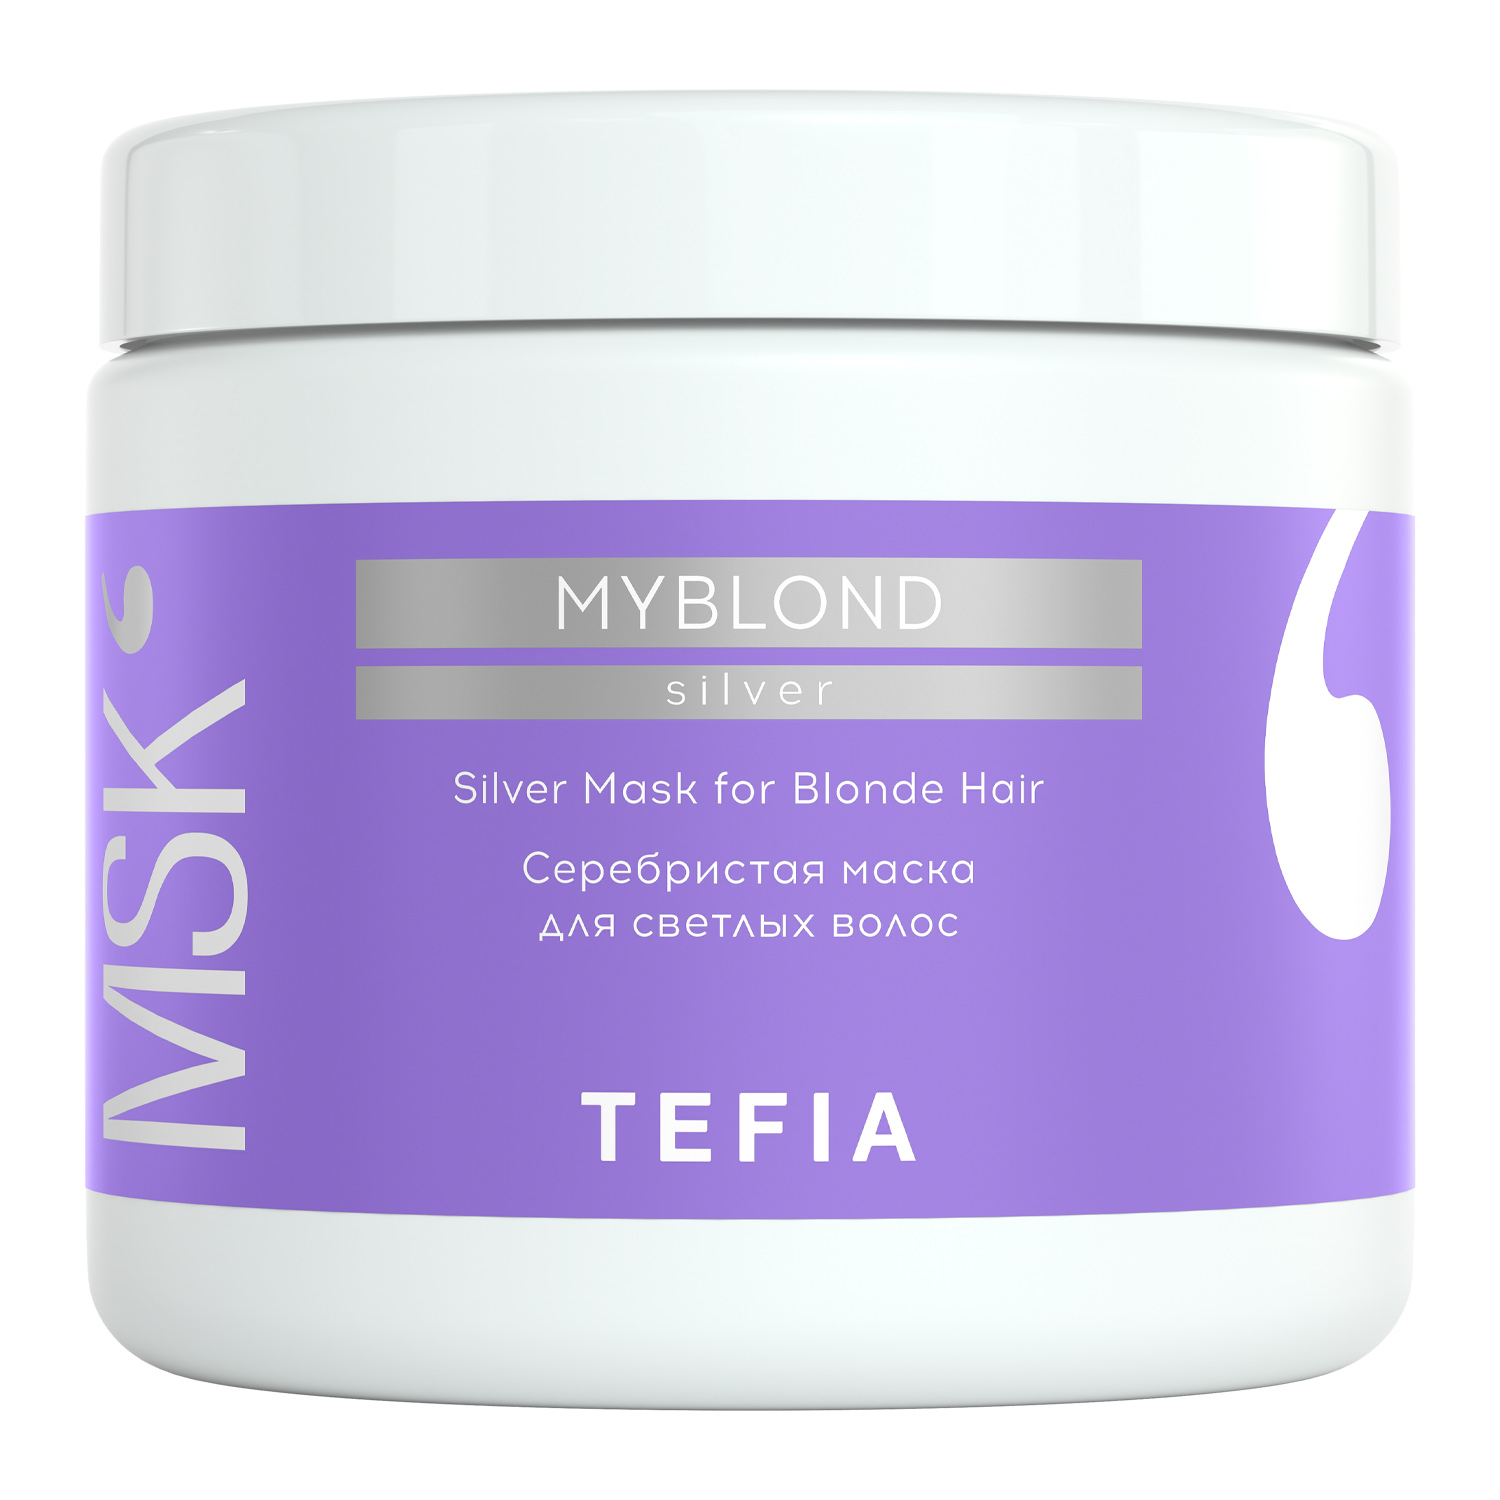 Tefia Серебристая маска для светлых волос 500 мл (Tefia, My 